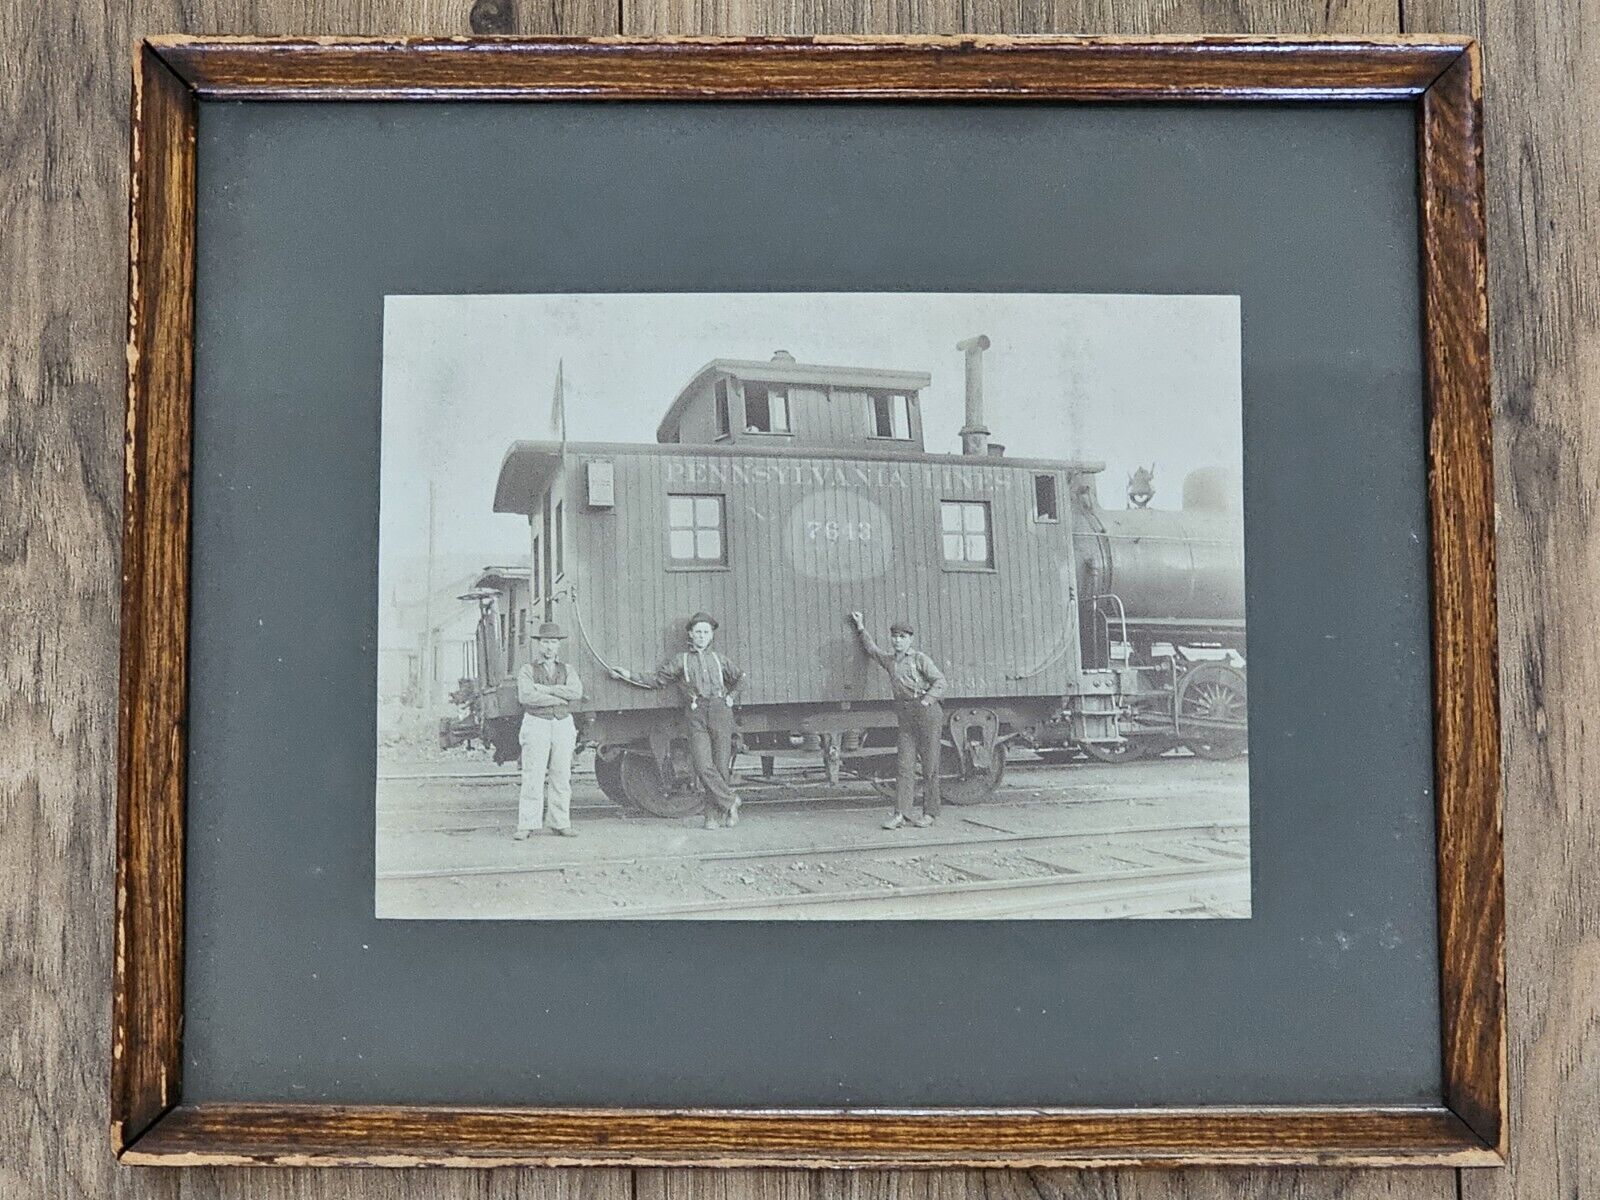 1900 Pennsylvania Lines Railroad Train #7643 Photo Steam Locomotive 3 Engineers